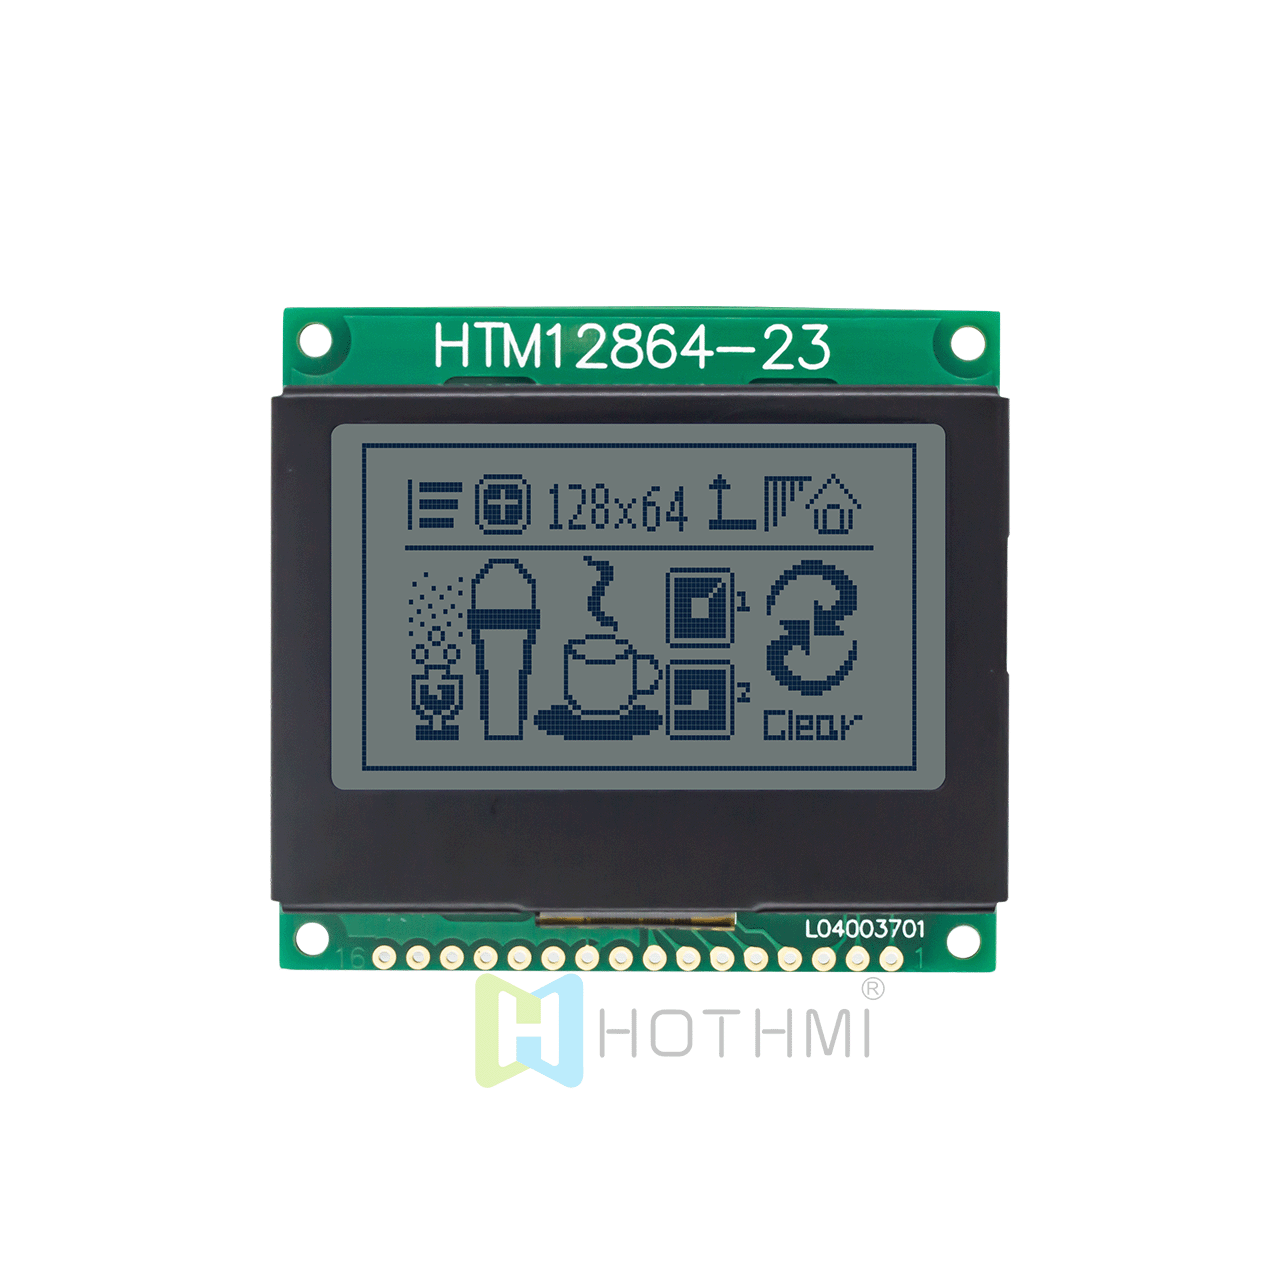 2.0-inch LCD graphic LCD module 128x64 resolution/12864 graphic dot matrix LCD display 3.3v/MCU interface